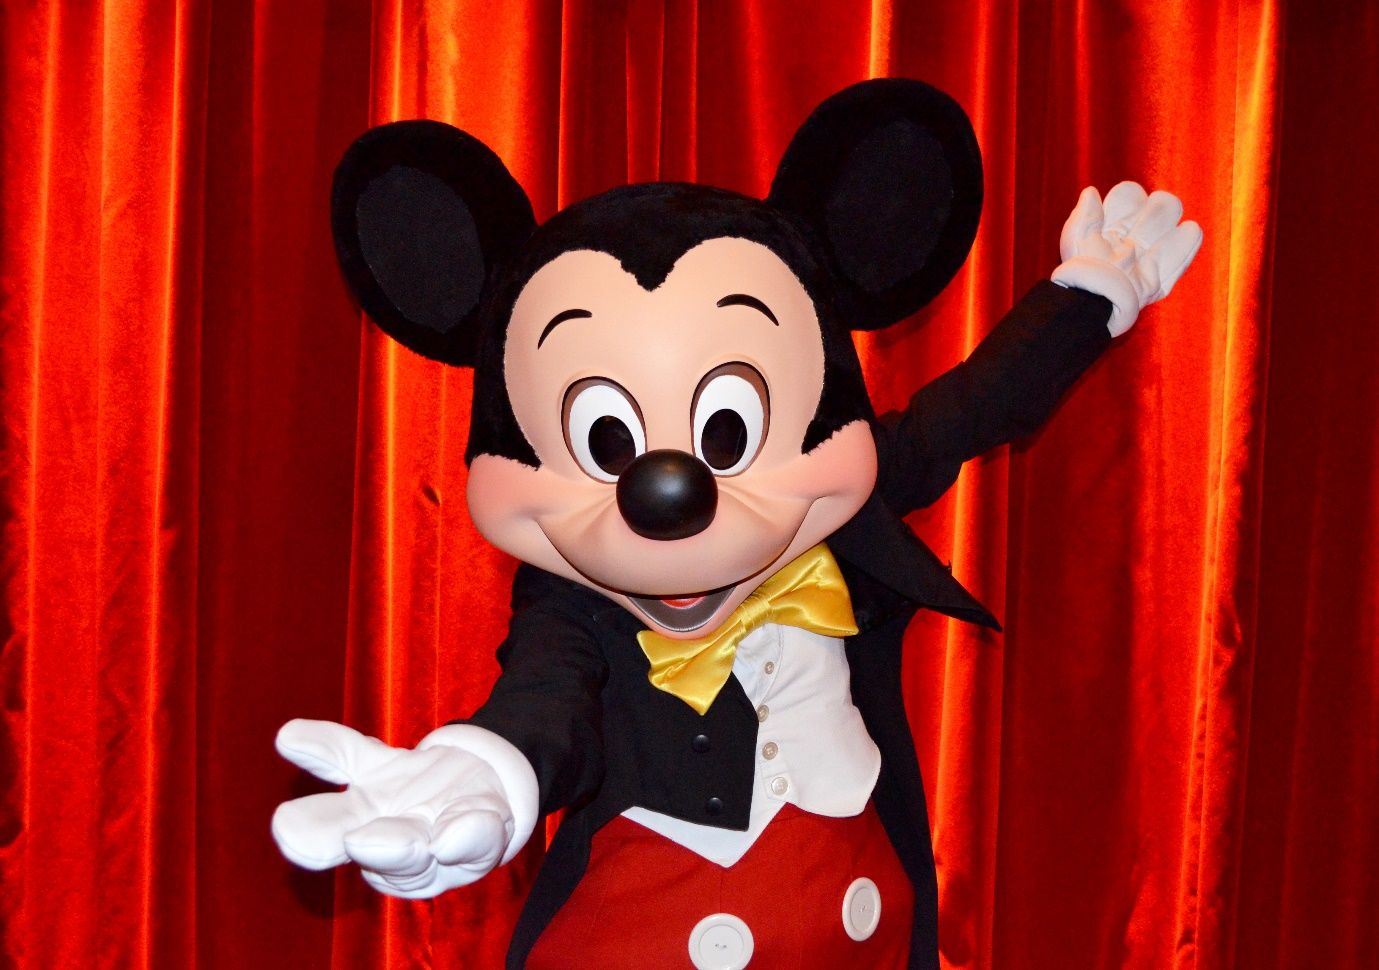 Disney - Time to Let it Go? | CMC Markets